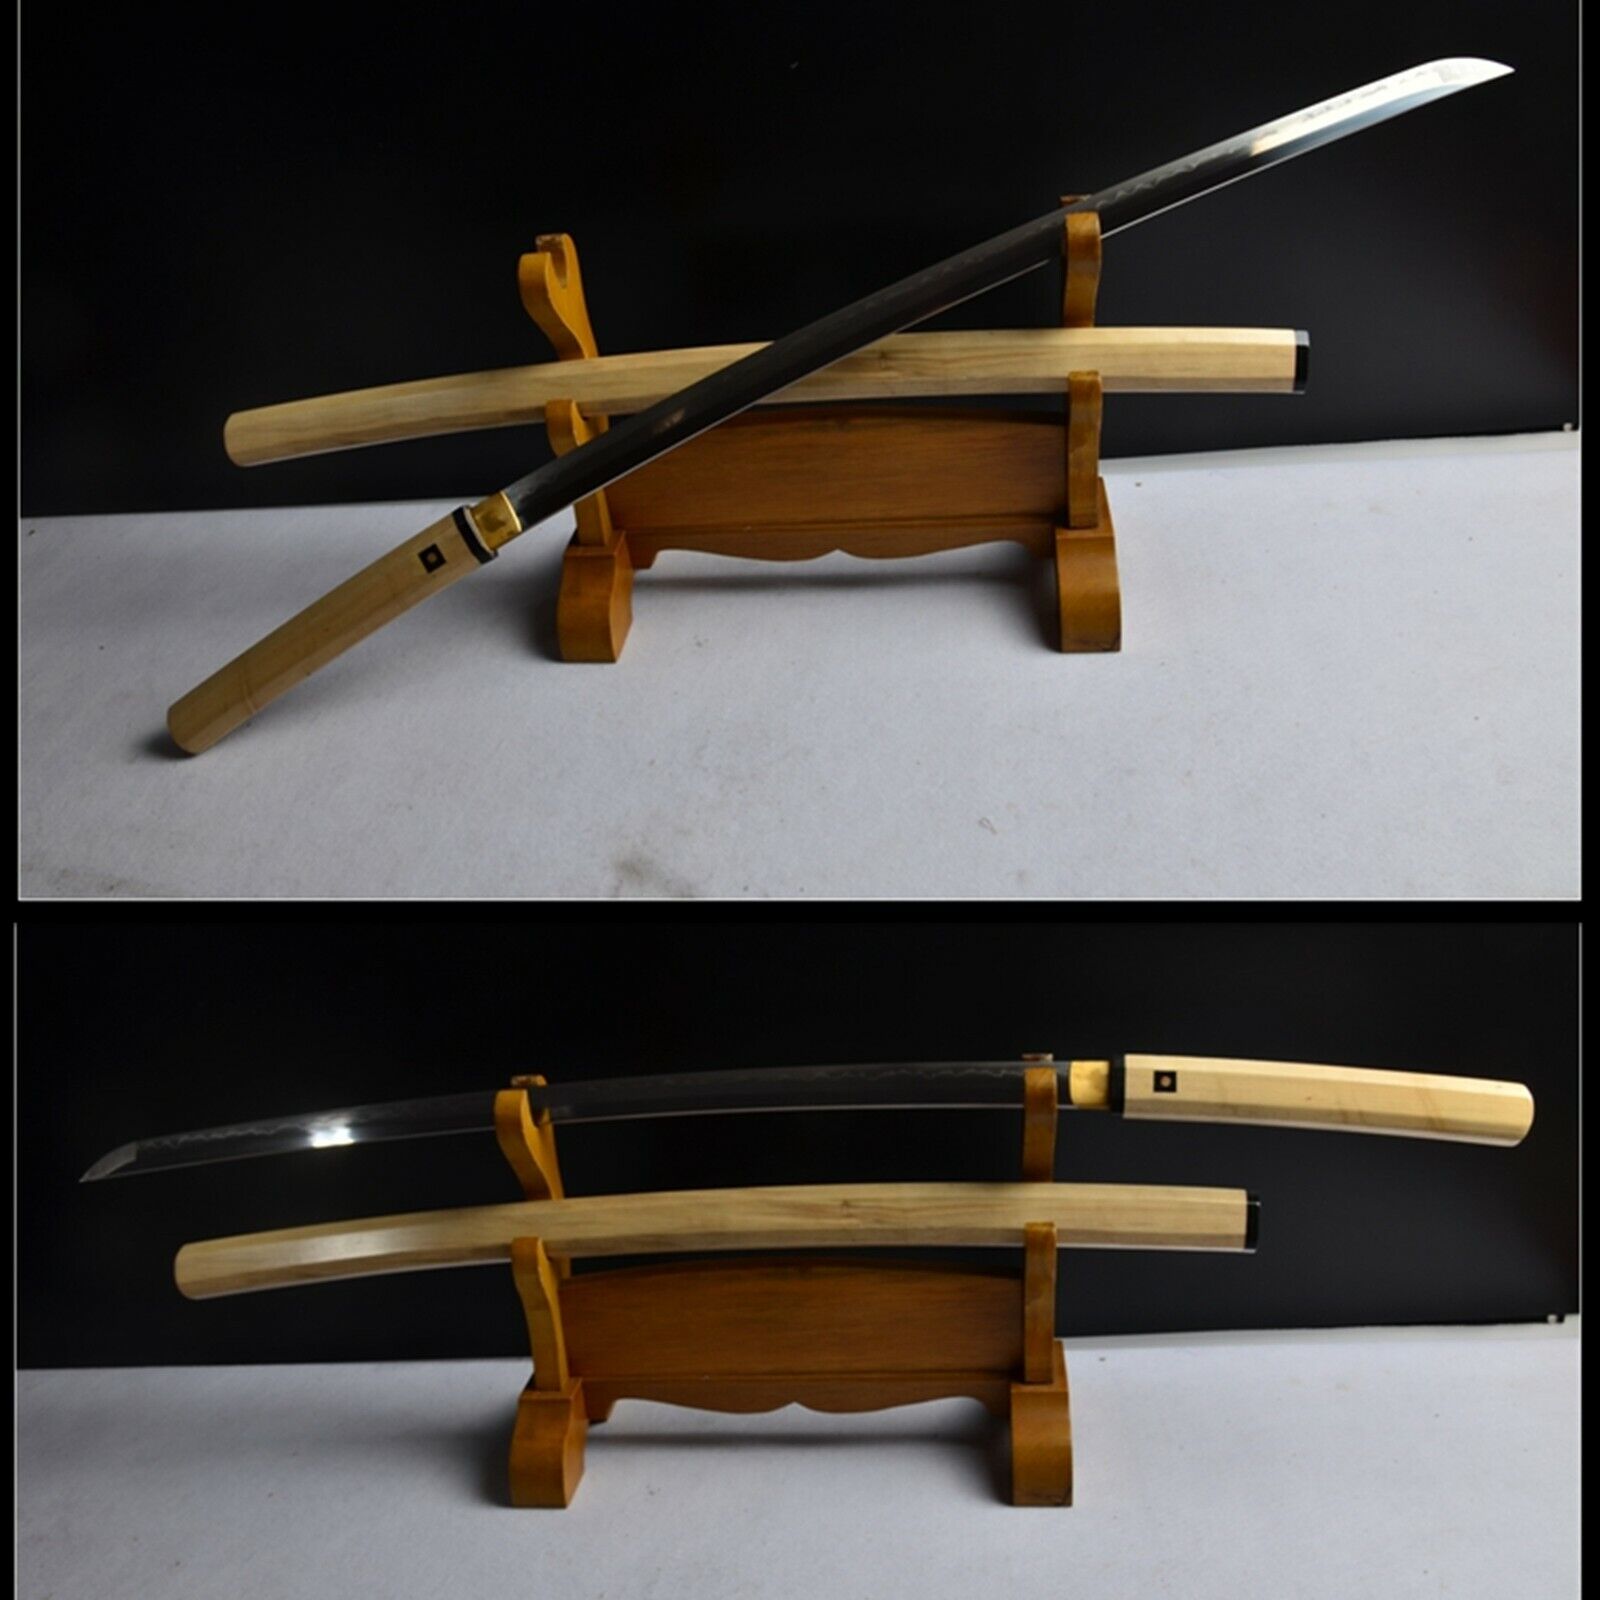  HANDMADE REAL HAMON JAPANESE NINJA SWORD CLAY TEMPER T10 STEEL BLADE SHARP